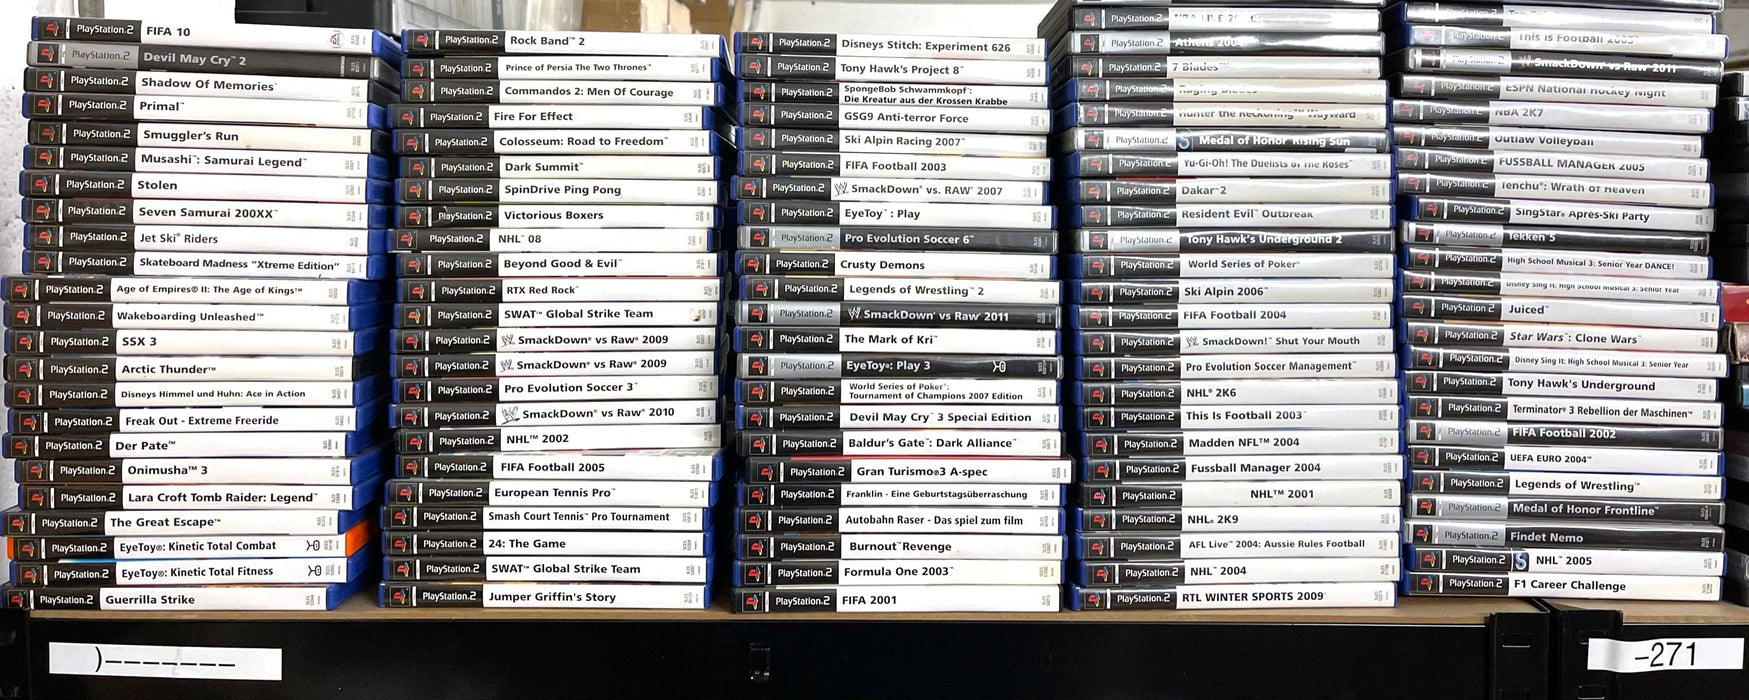 Glaciergames PlayStation 2 Game Speed Kings PlayStation 2 (Nr.876)